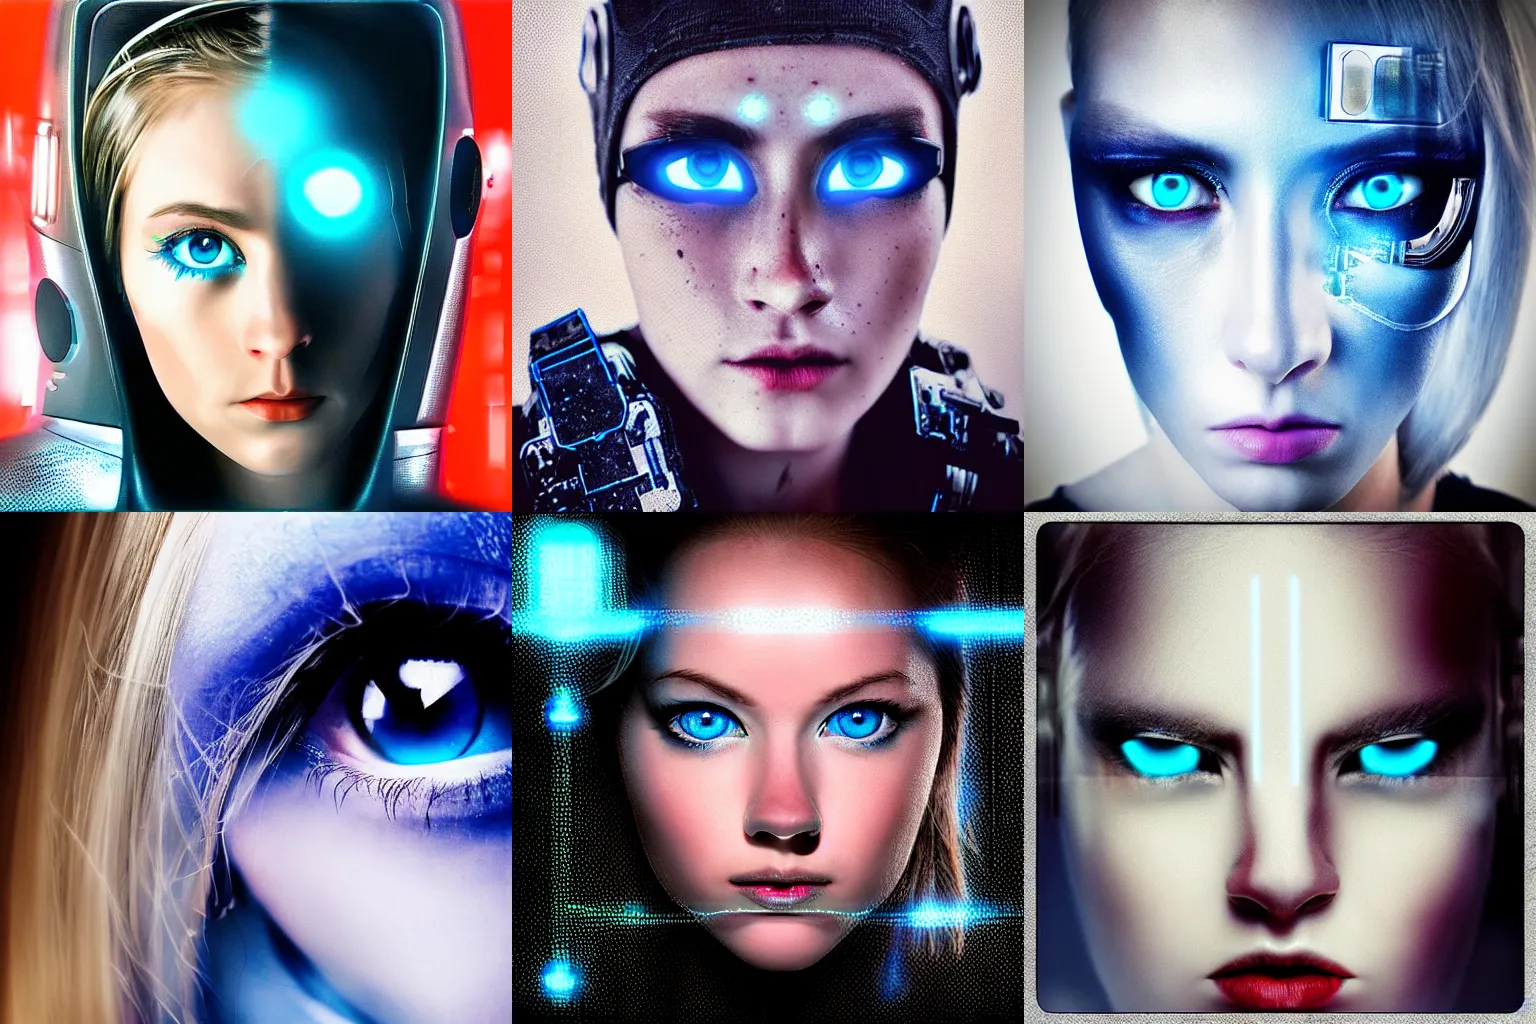 Prompt: “artistic cinematic portrait of a cyborg female blue eyes hi tech futuristic”